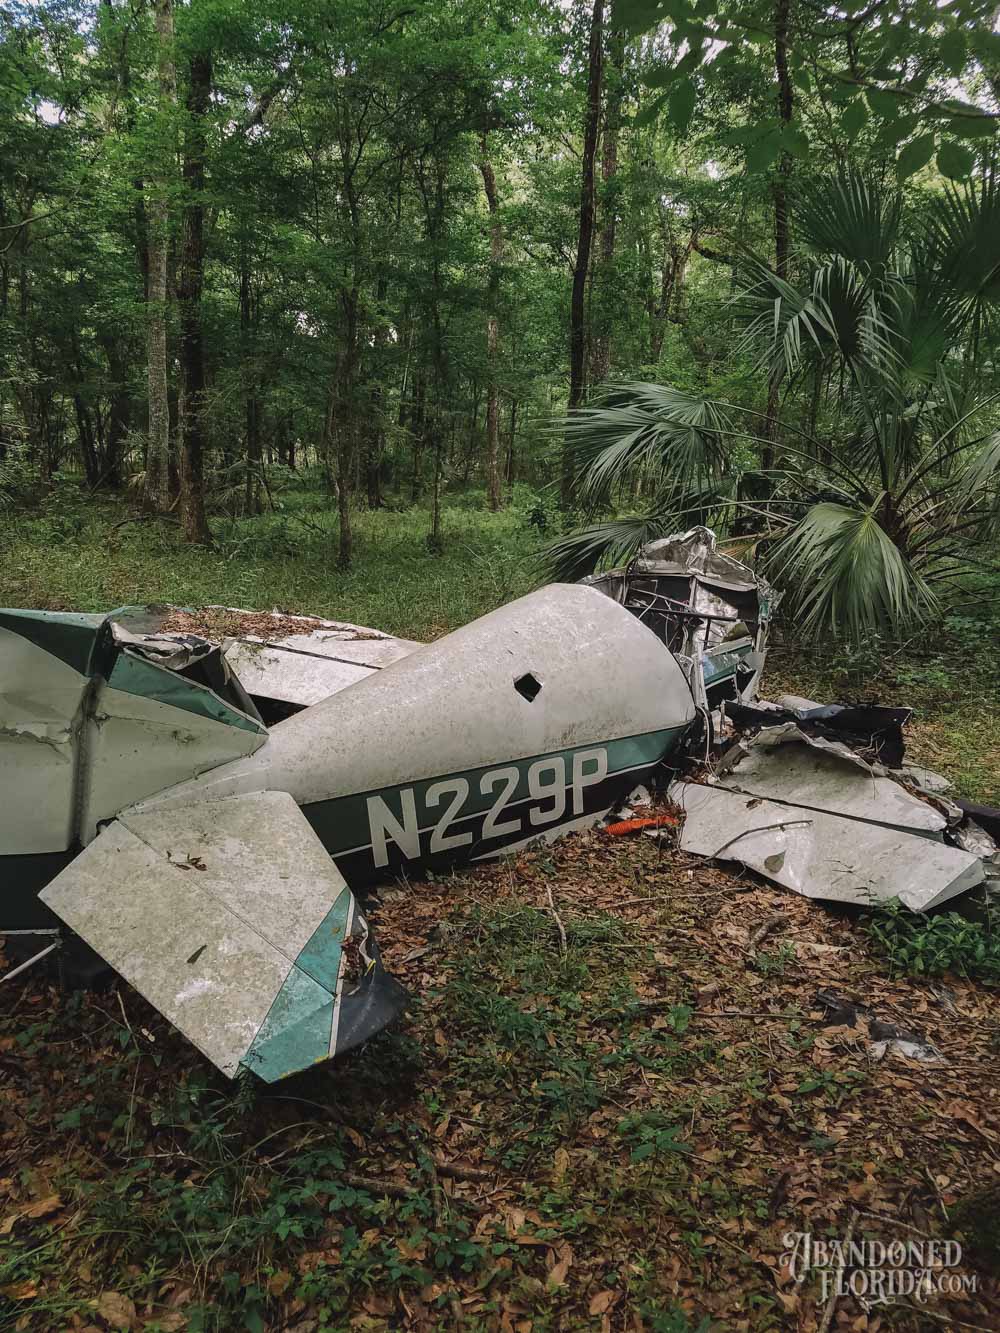 Theodore Weiss Plane Wreckage | Photo © 2017 Bullet, www.abandonedfl.com